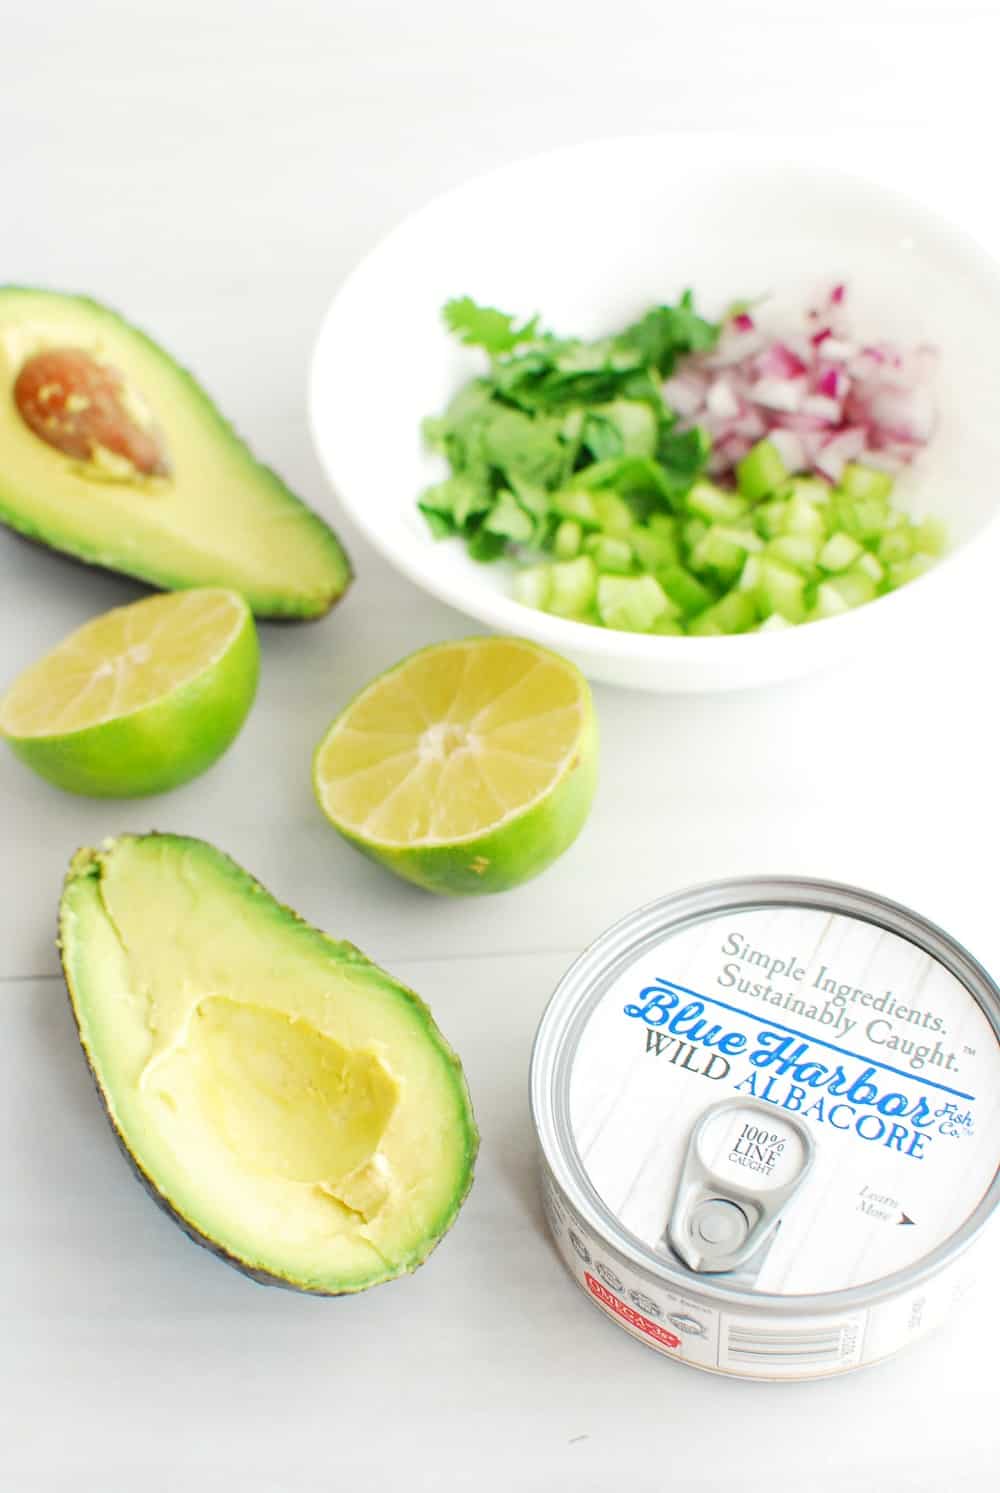 Ingredients to make avocado tuna salad